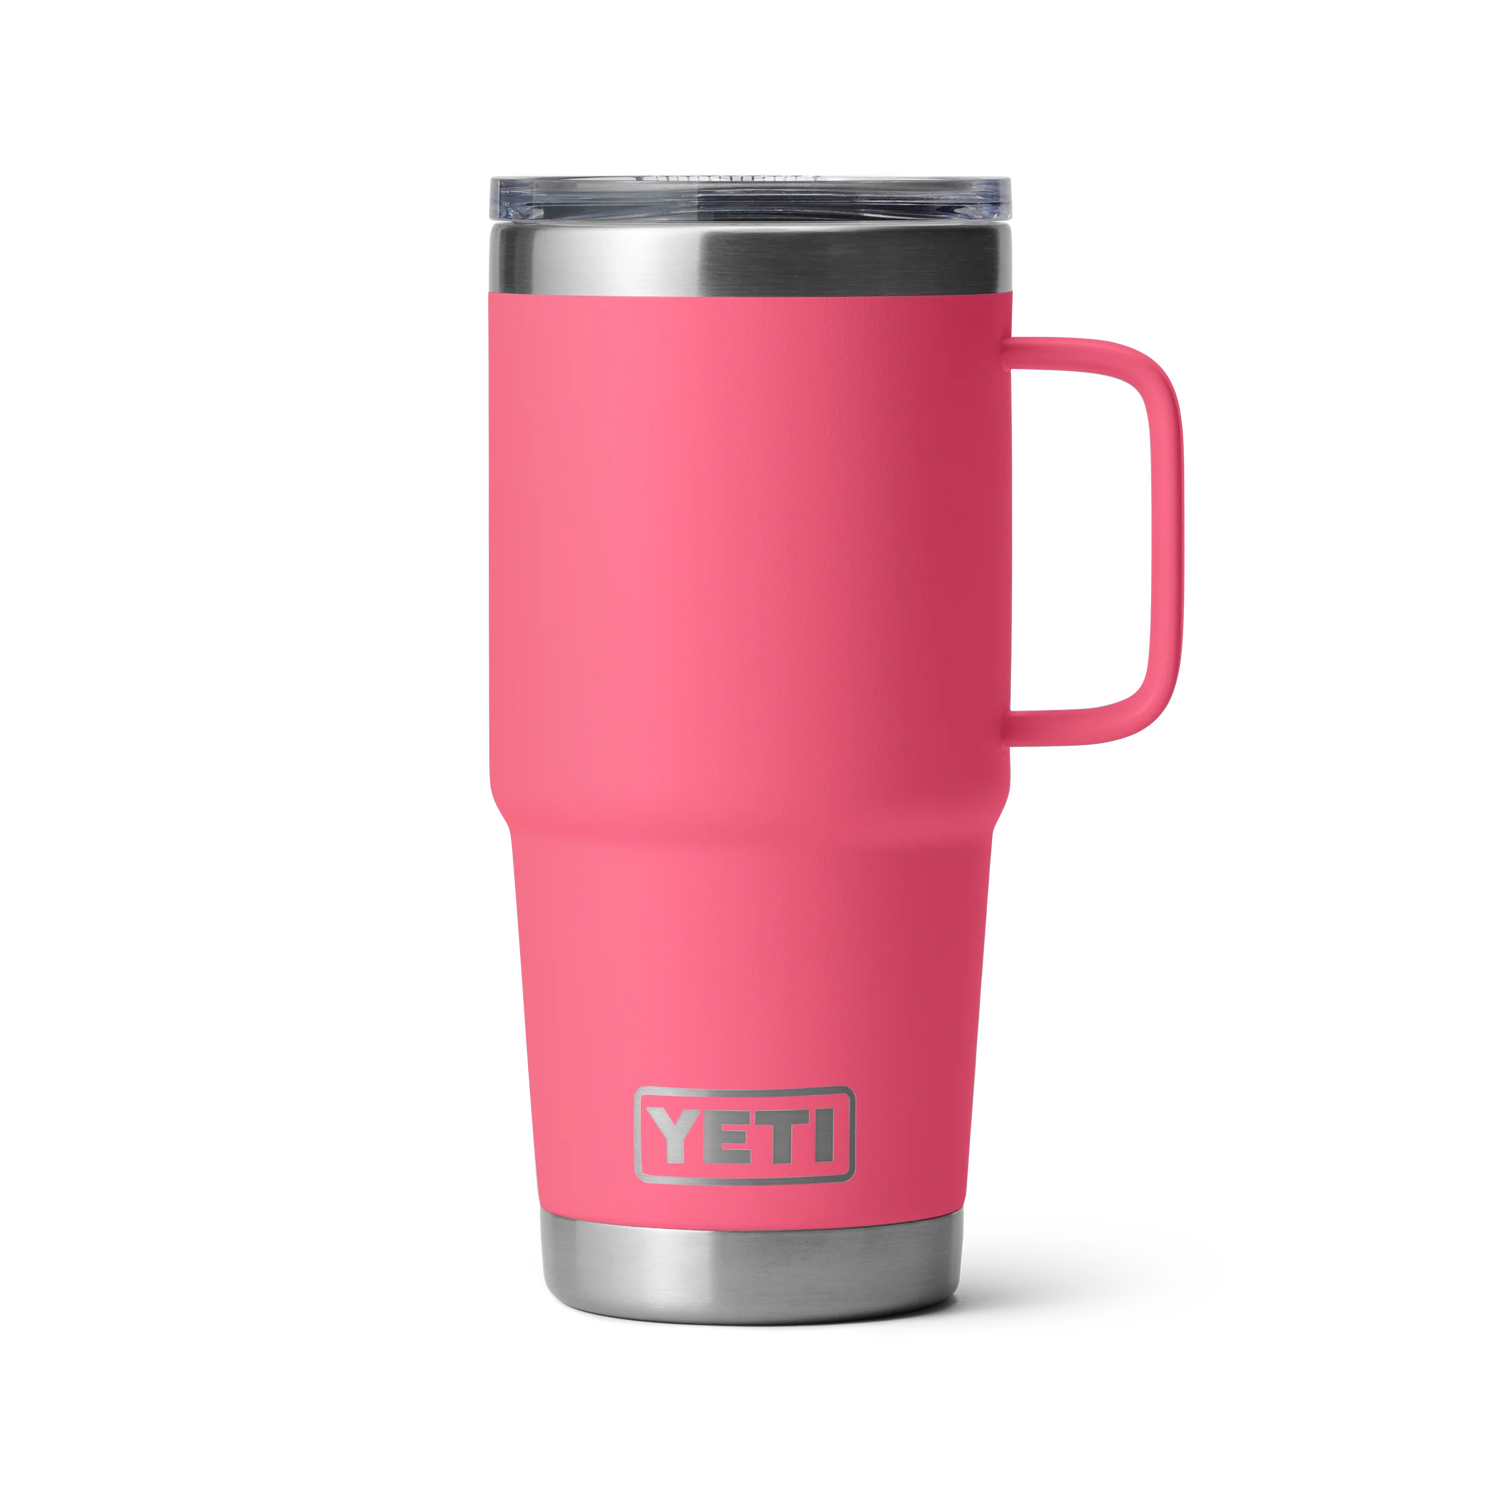 Yeti 20oz (591ml) Travel Mug with Stronghold Lid-Coolers & Drinkware-Yeti-Tropical Pink-Fishing Station